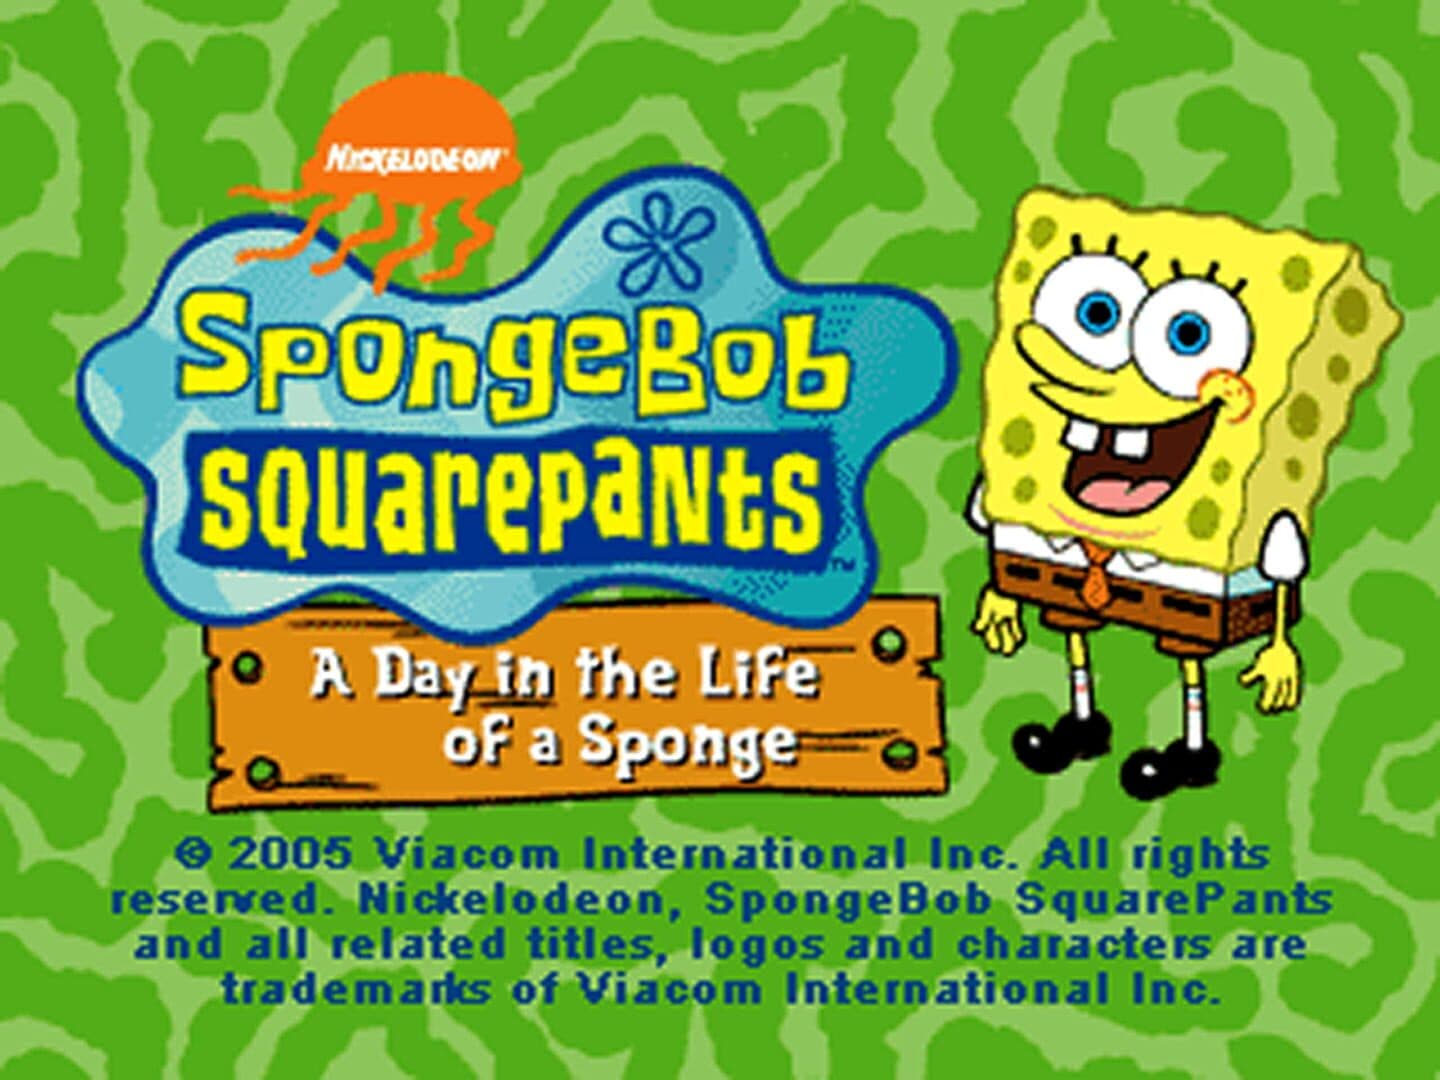 SpongeBob SquarePants: A Day in the Life of a Sponge Image